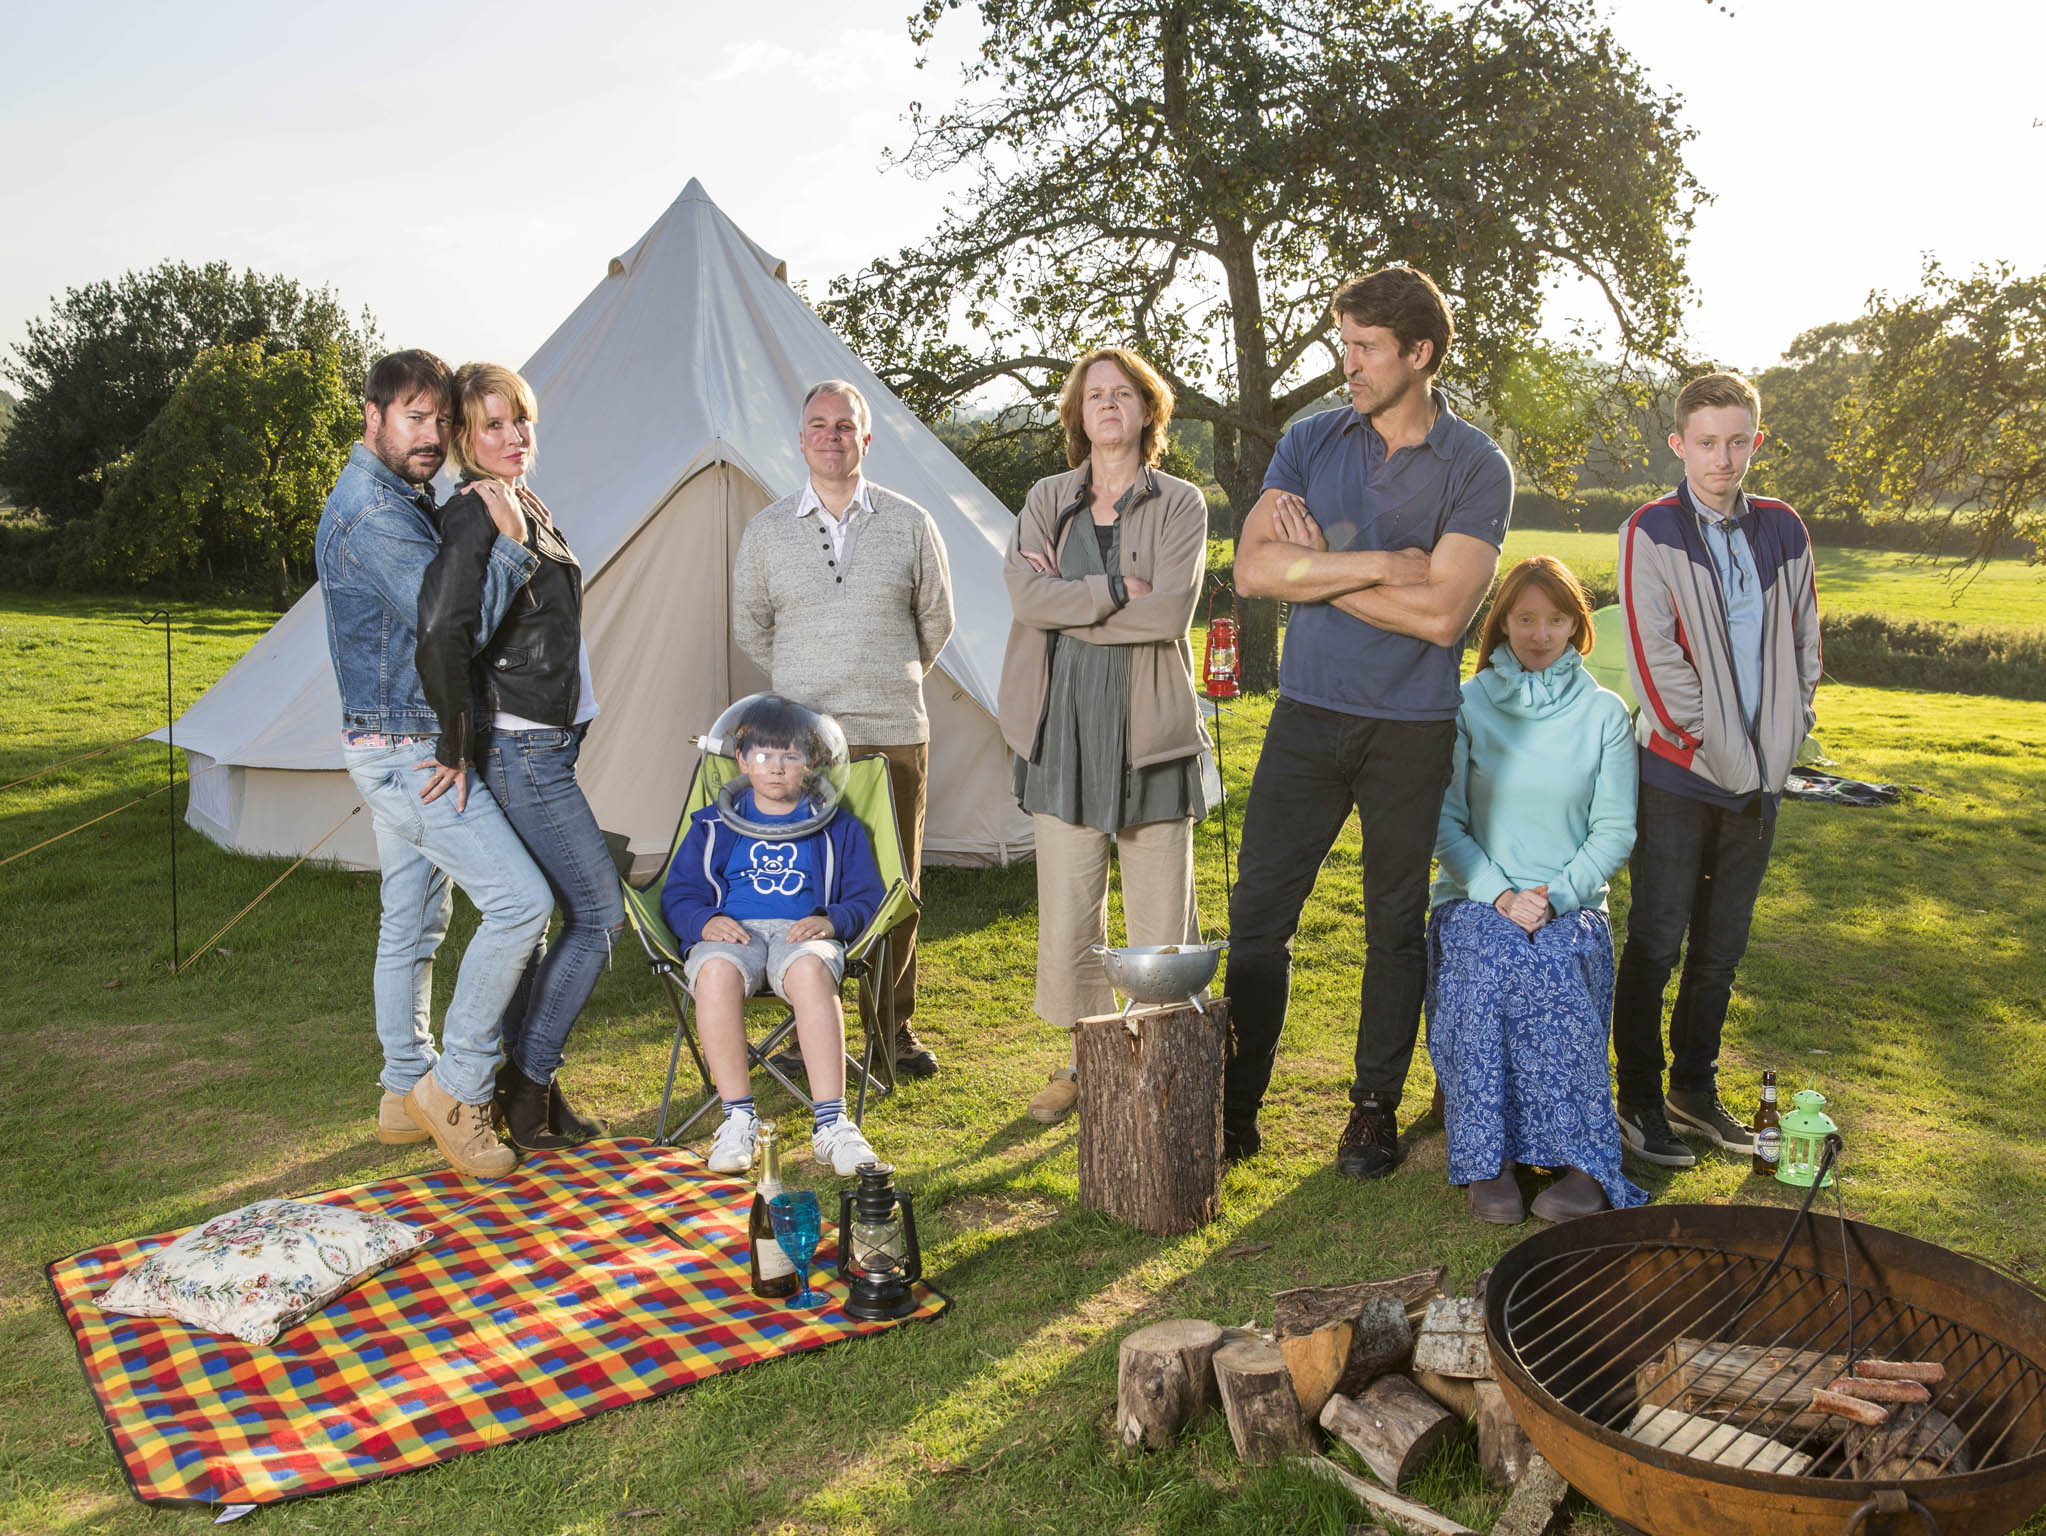 Sky TV's new comedy show Camping